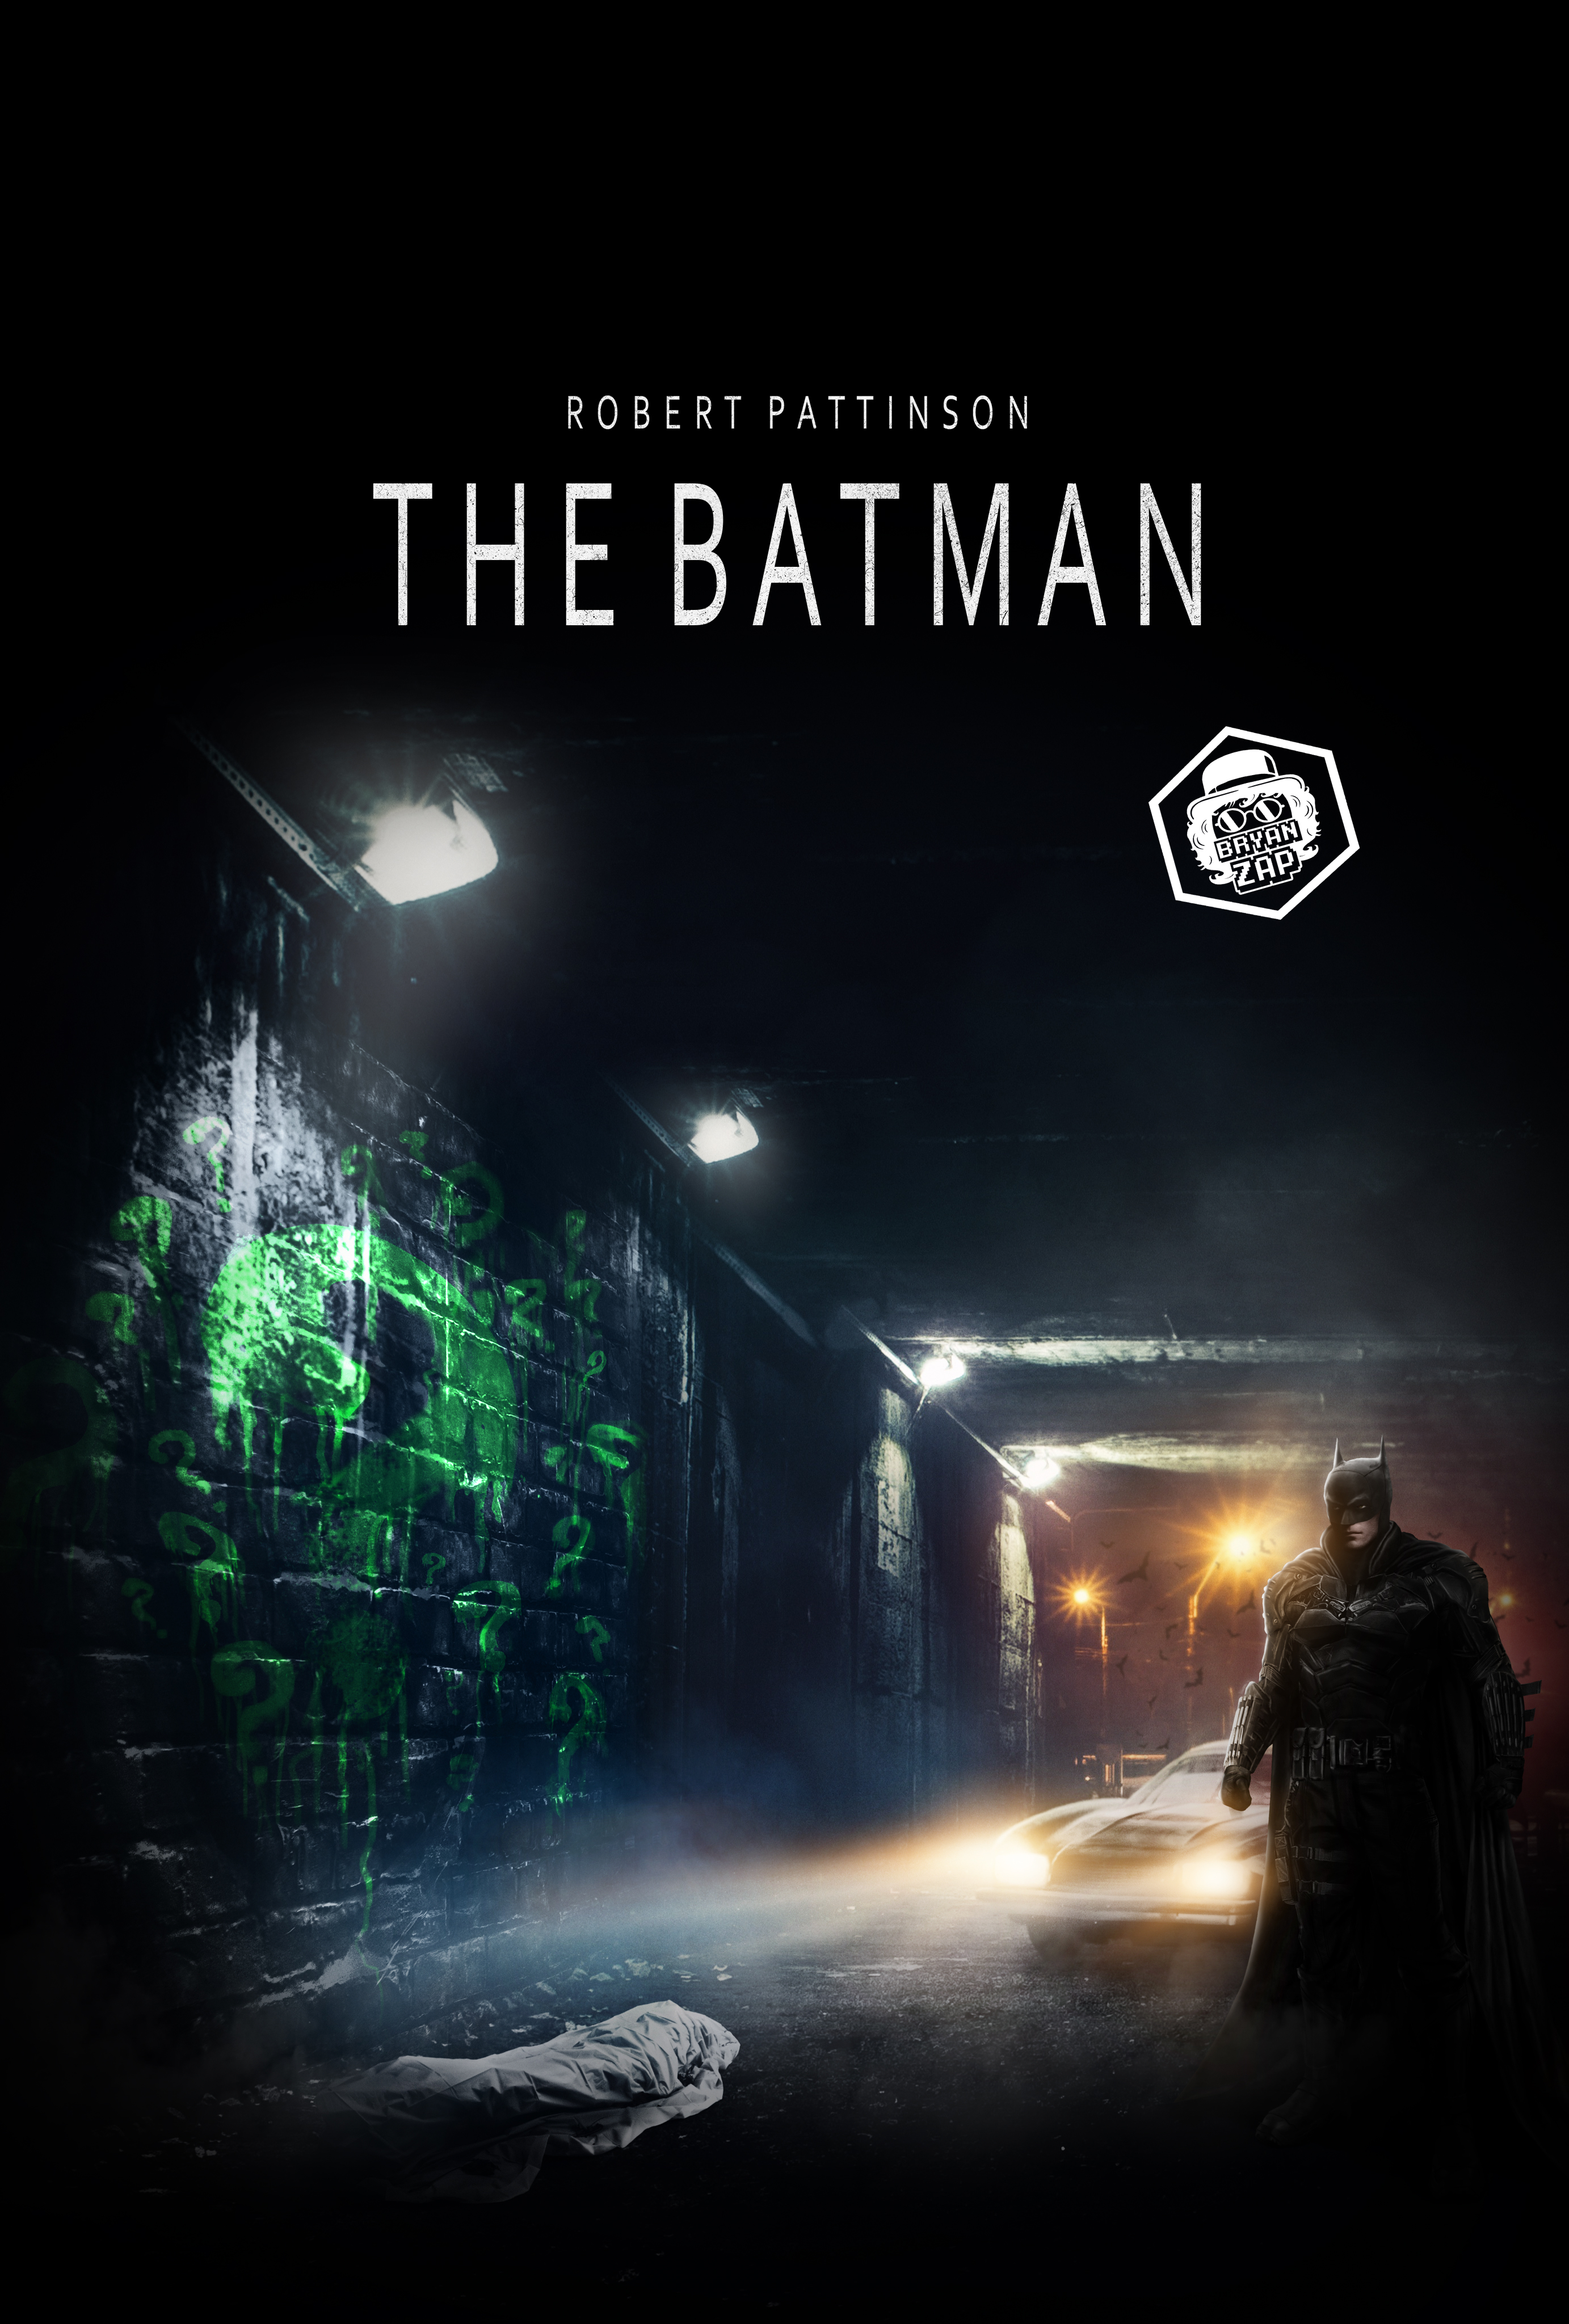 The Batman Robert Pattinson Poster by Bryanzap on DeviantArt